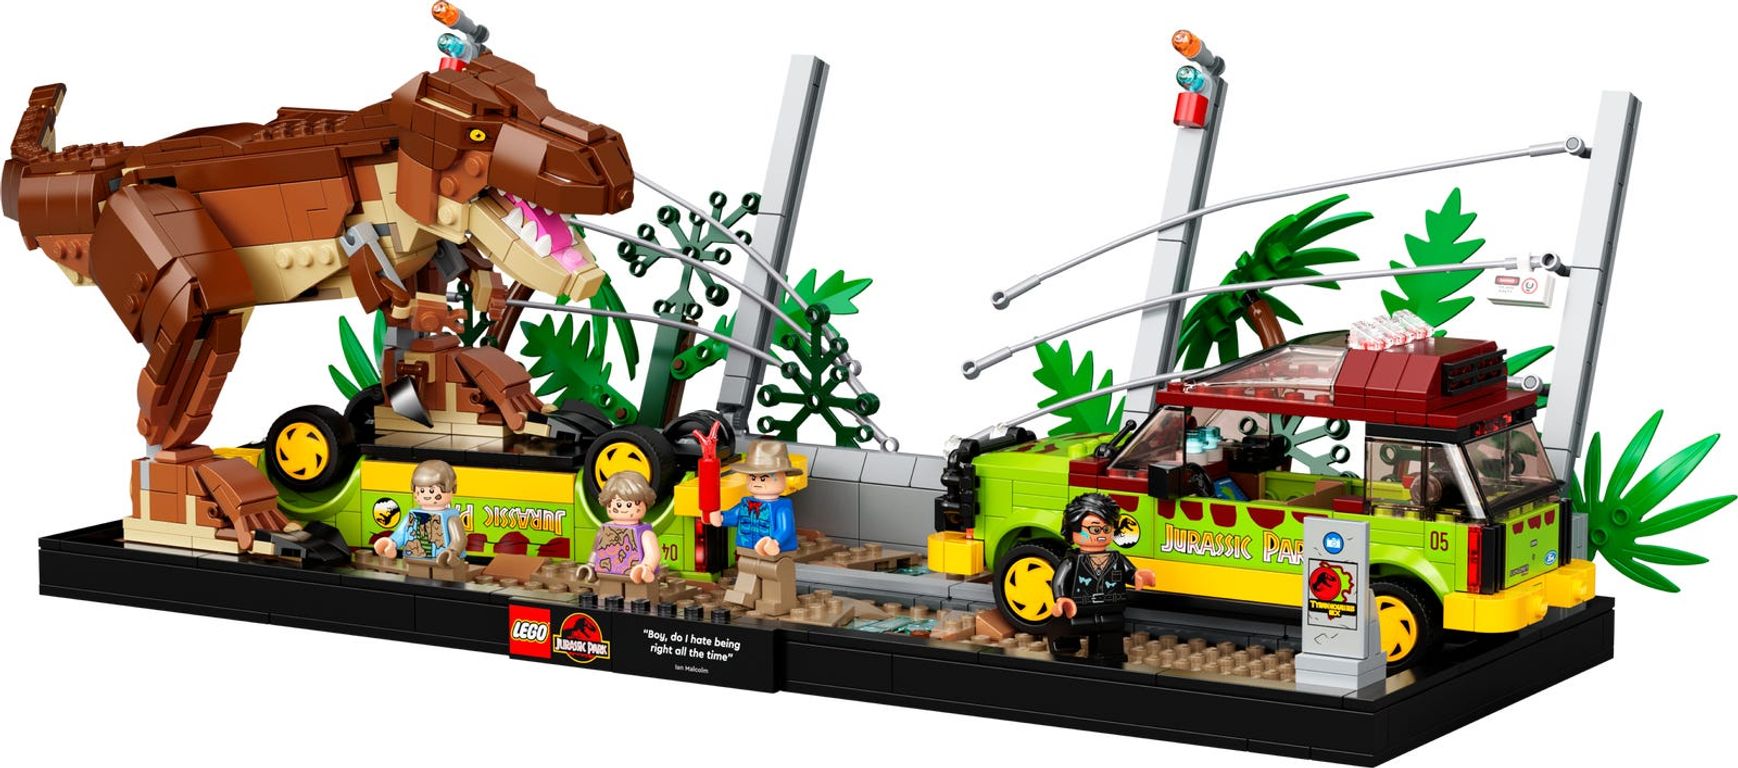 LEGO® Jurassic World T. rex Breakout components